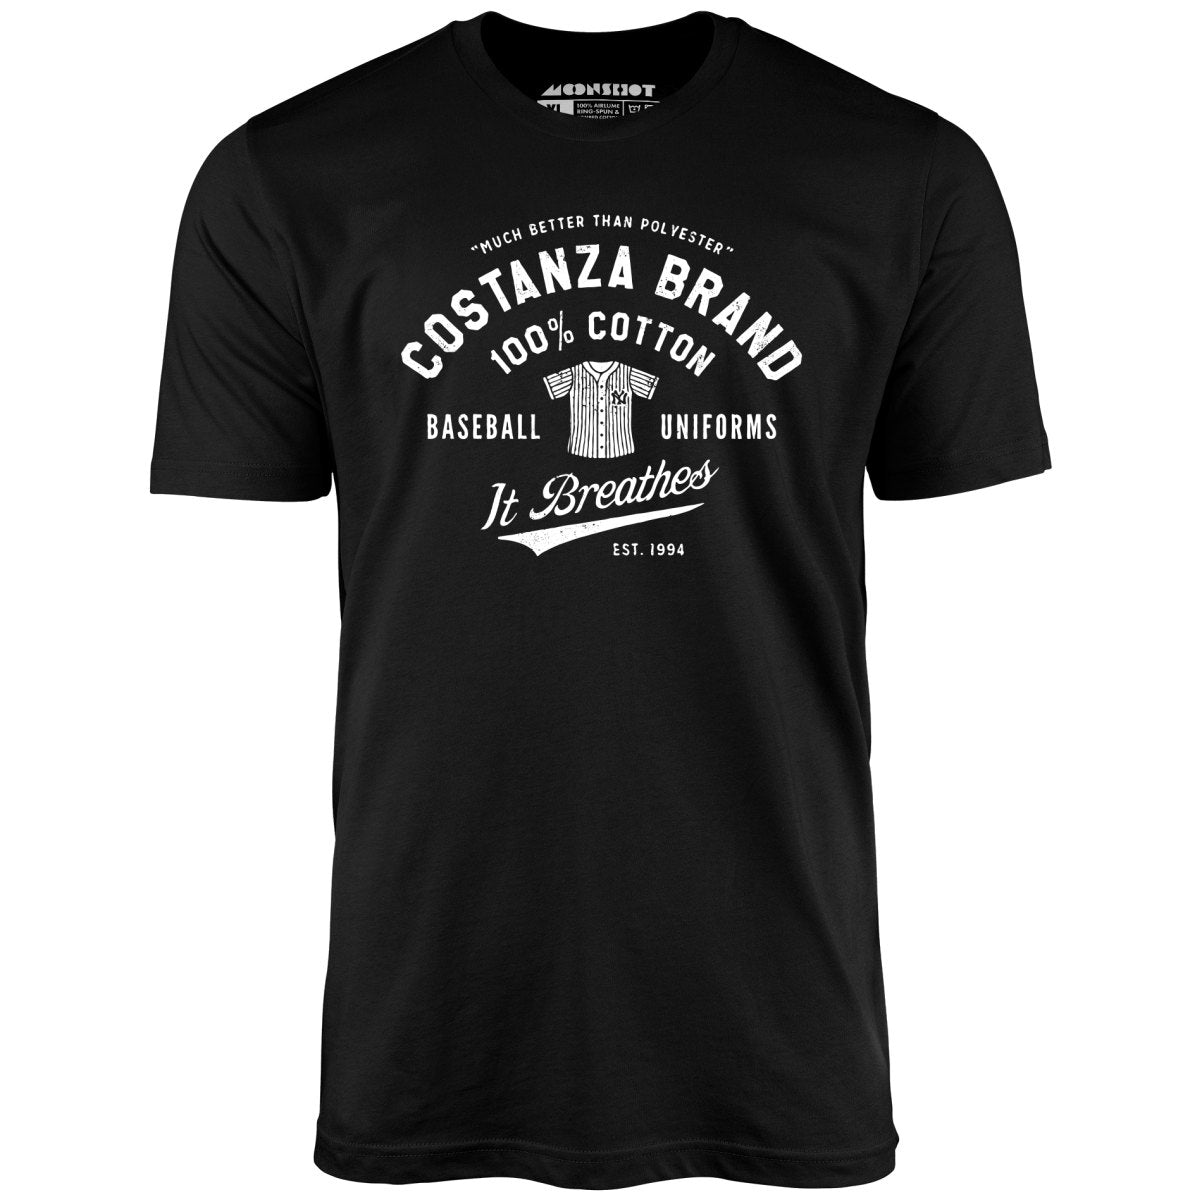 Costanza Brand Cotton Baseball Uniforms - Unisex T-Shirt Black / 4XL